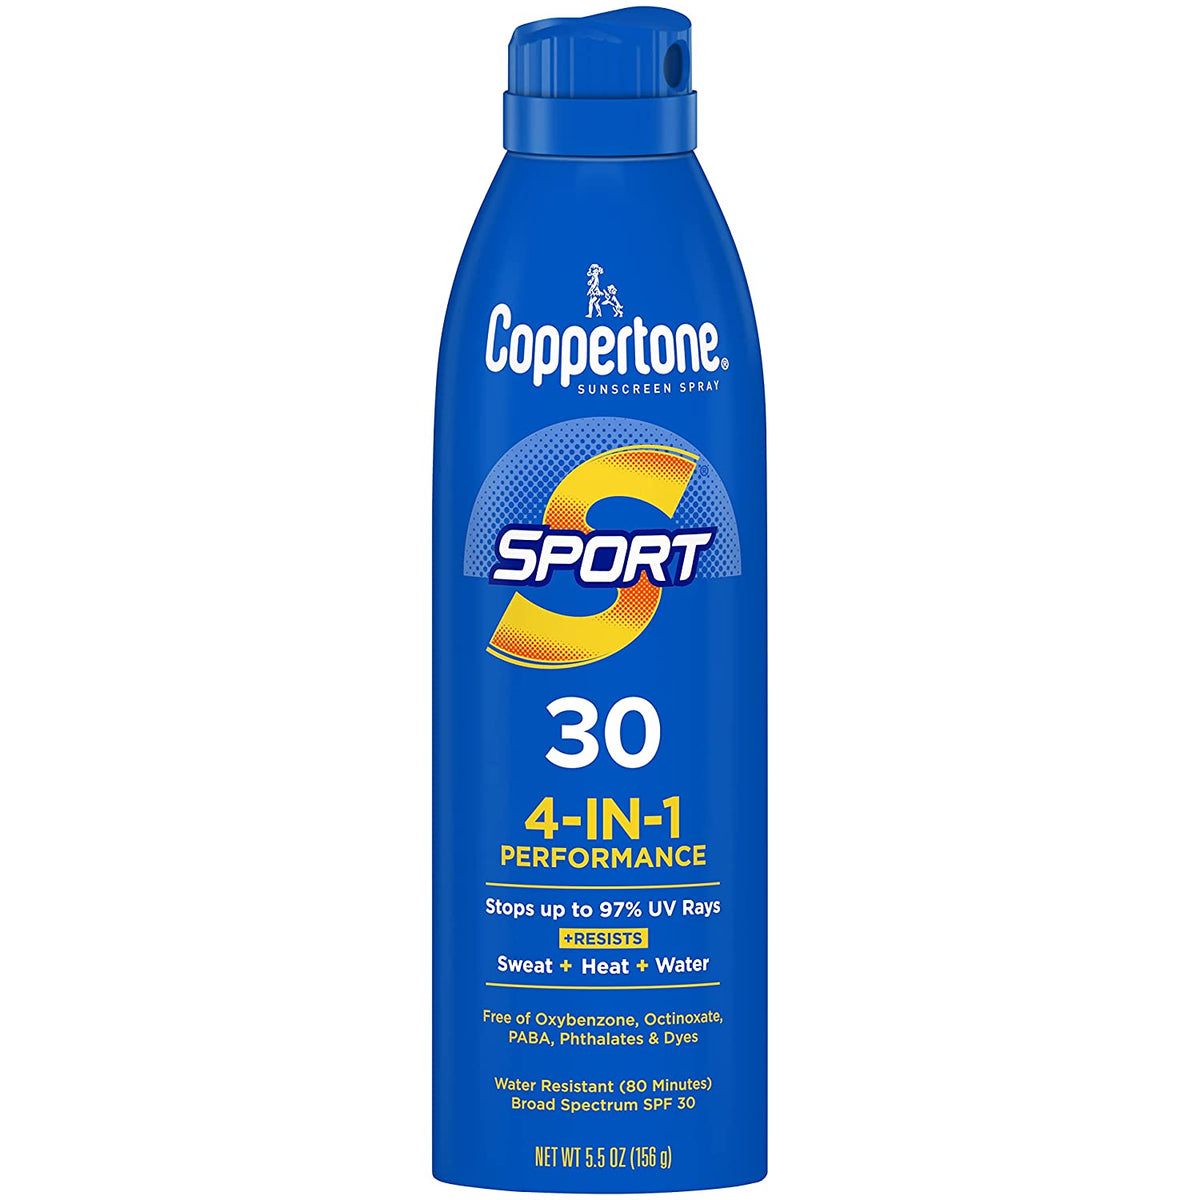 Coppertone Sunscreen Spray SPF 30 4-IN-1 Performance (196 g) Coppertone